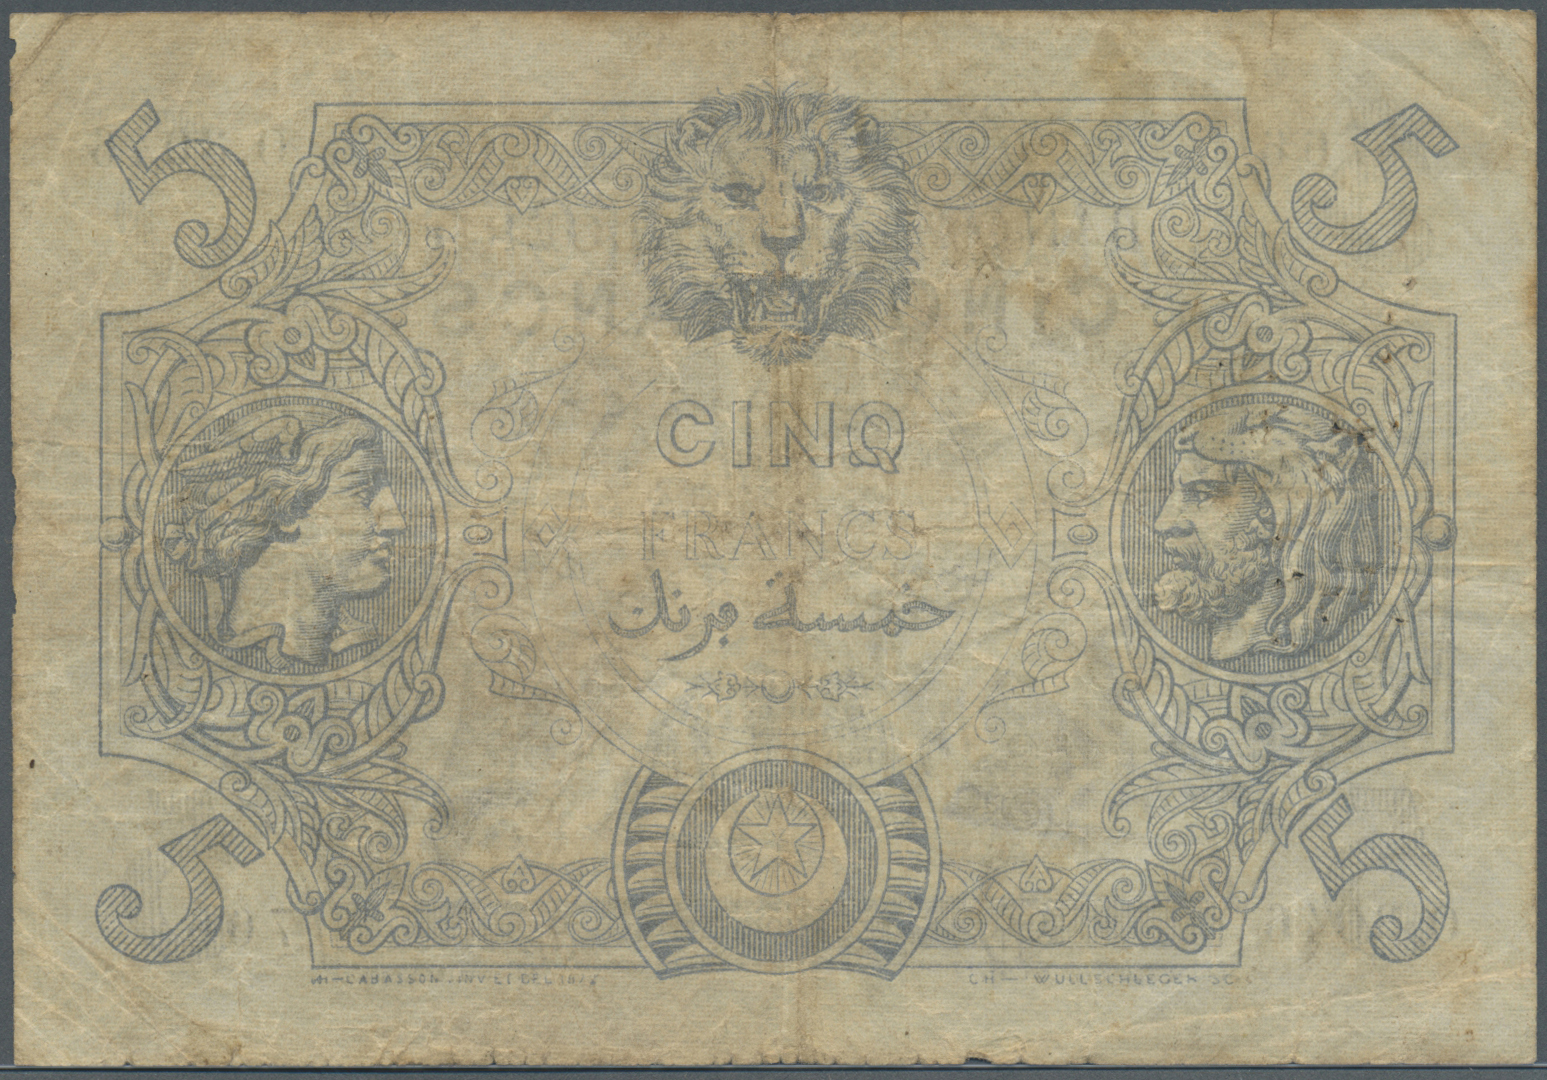 00009 Algeria / Algerien: 5 Francs 1924 P. 71b, Used With Several Folds And Creases, Lots Of Pinholes At Right, Minor Bo - Algeria